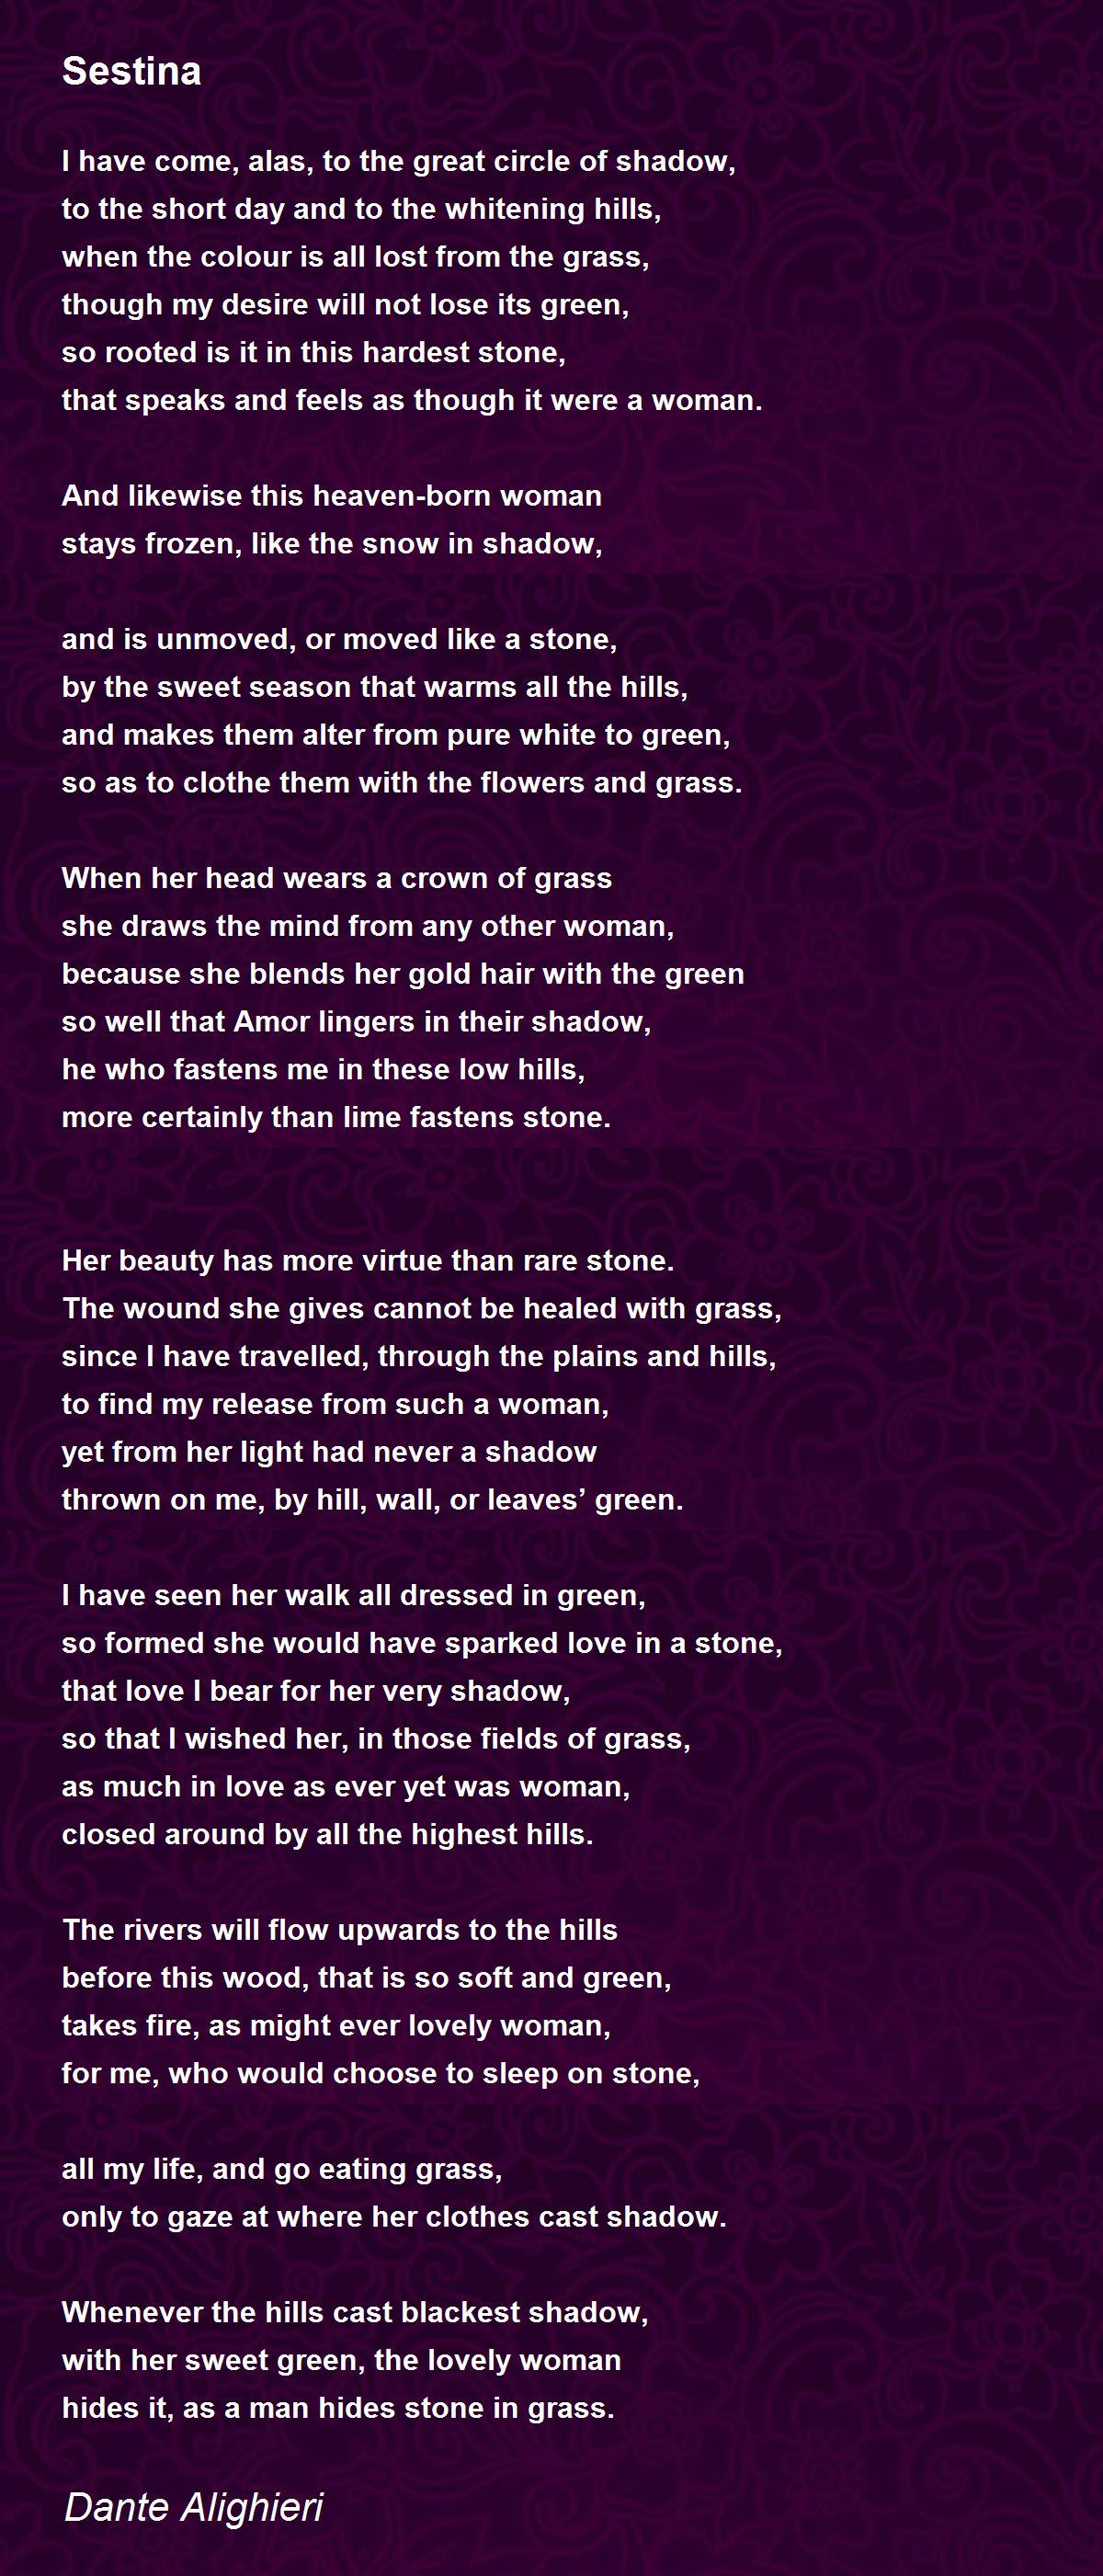 Sestina Poem by Dante Alighieri - Poem Hunter Comments